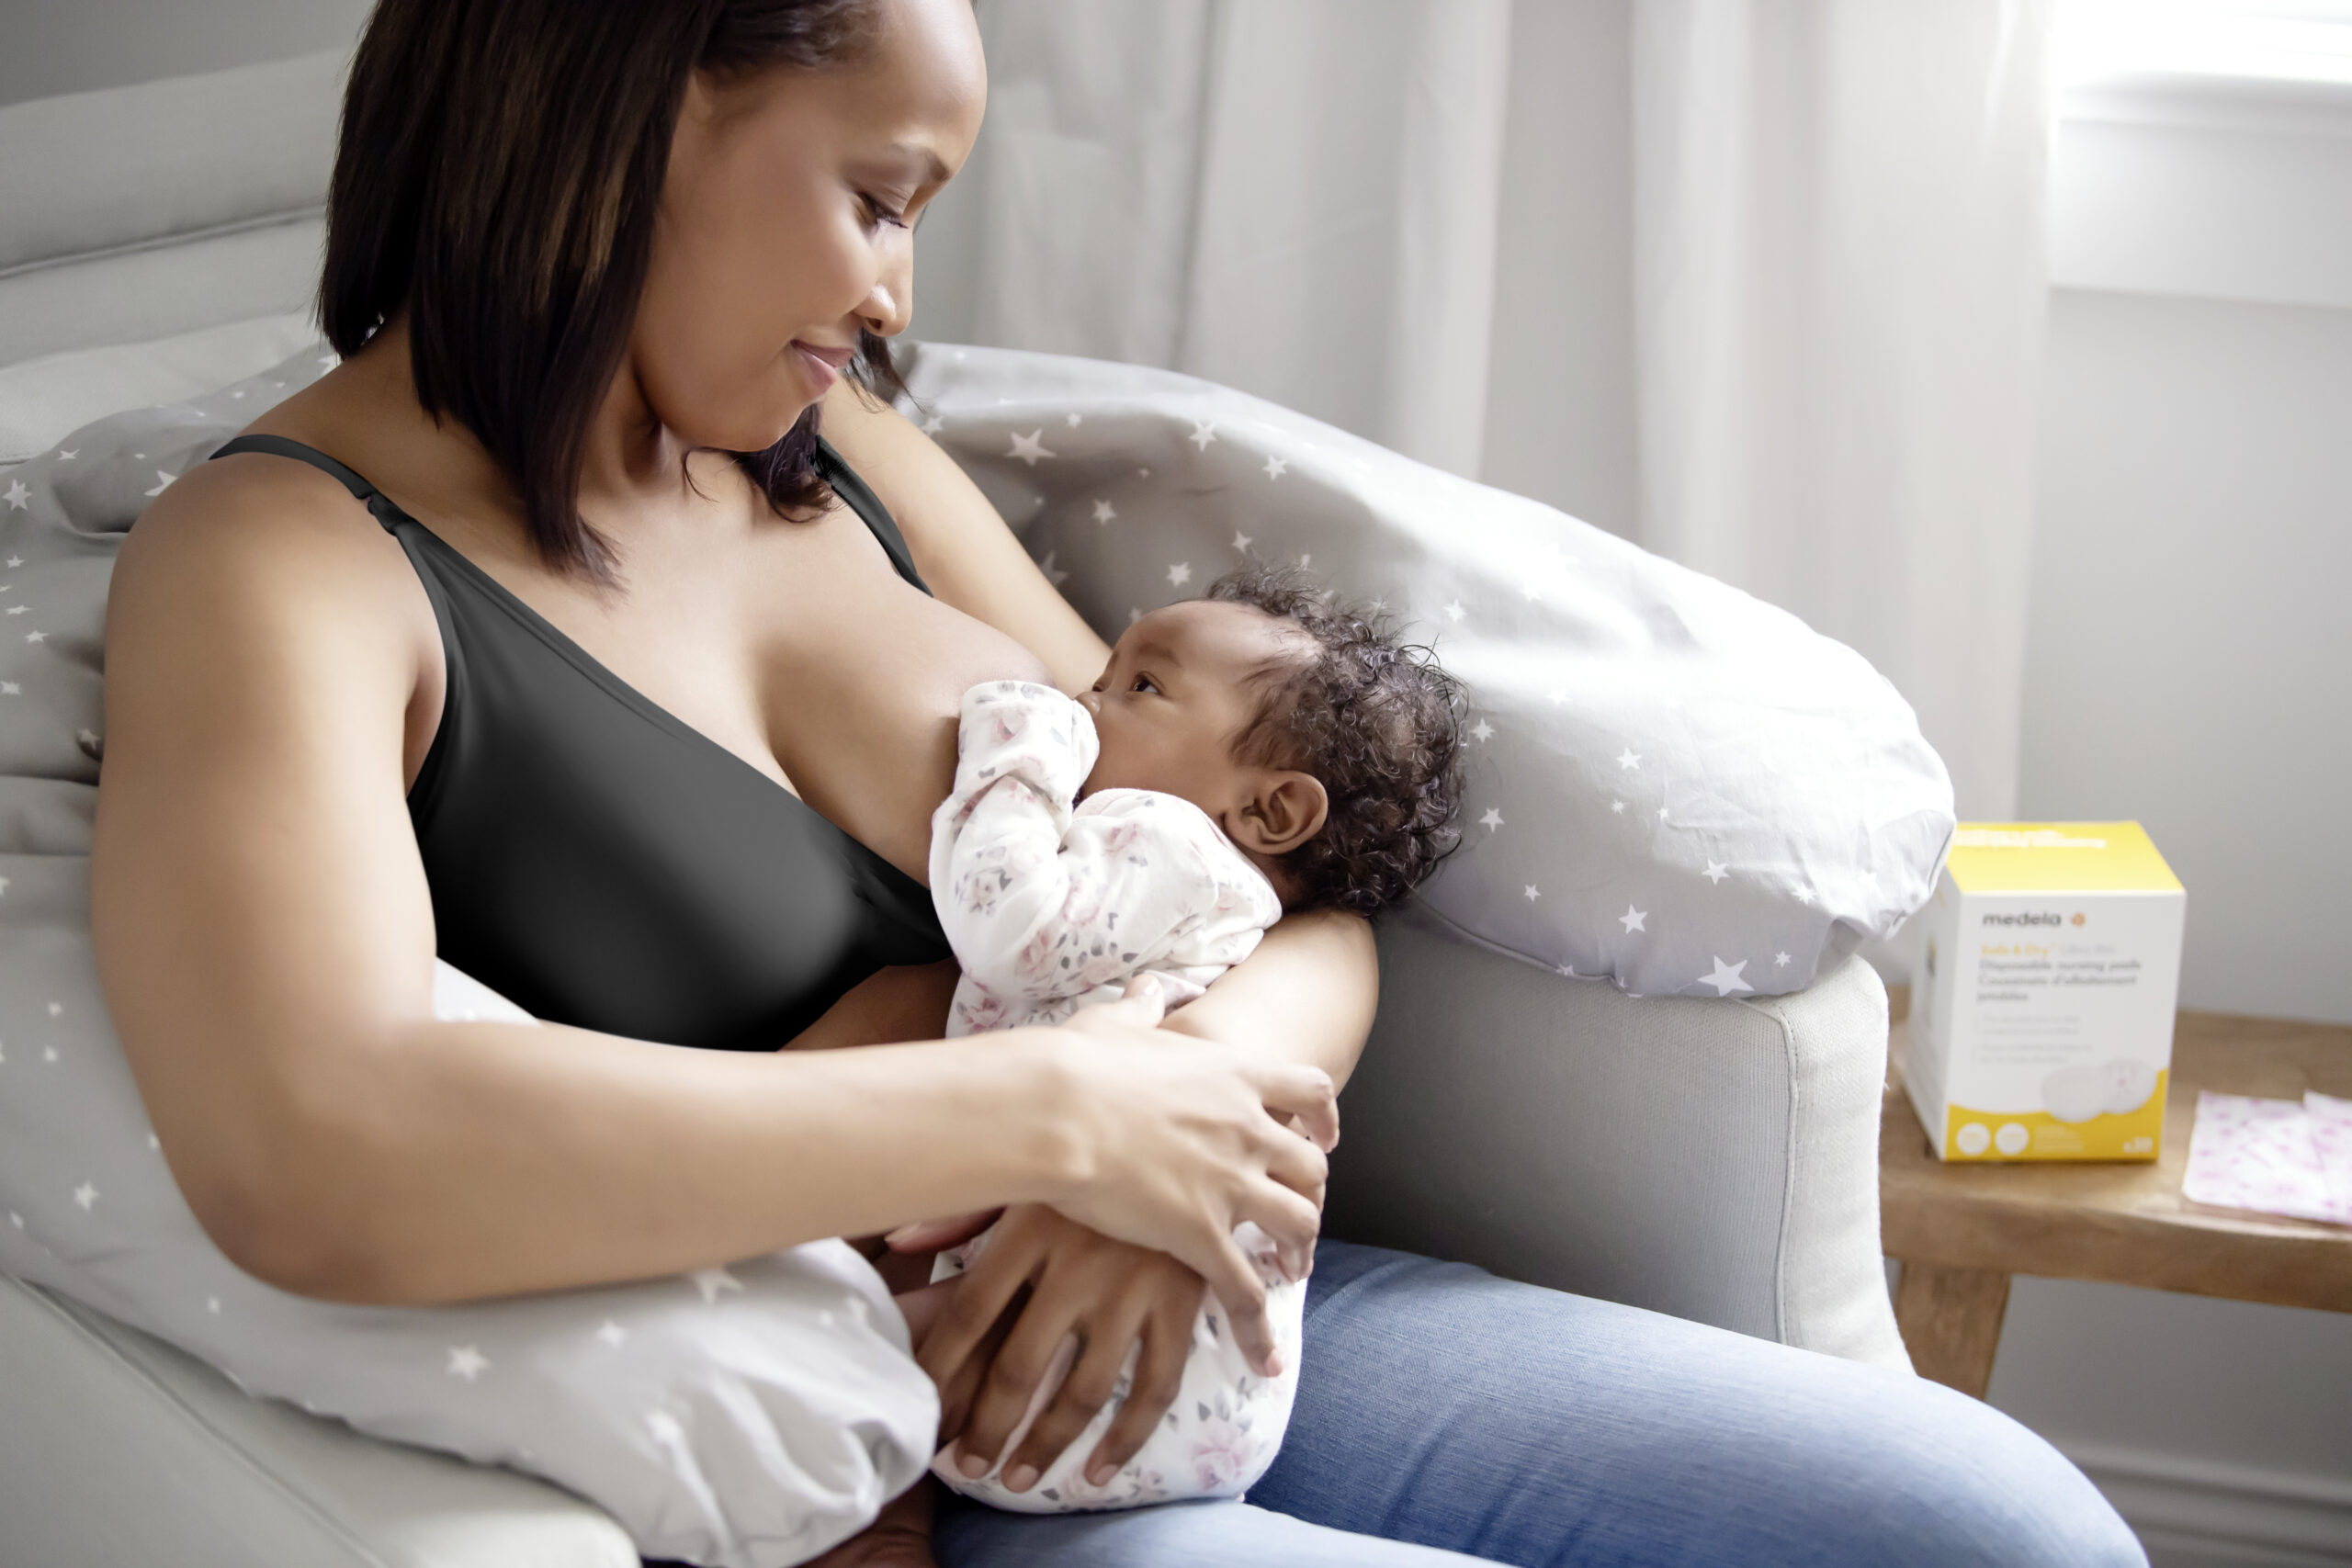 Medela Ultimate Bodyfit Bra for Maternity/Breastfeeding, Chai, Small